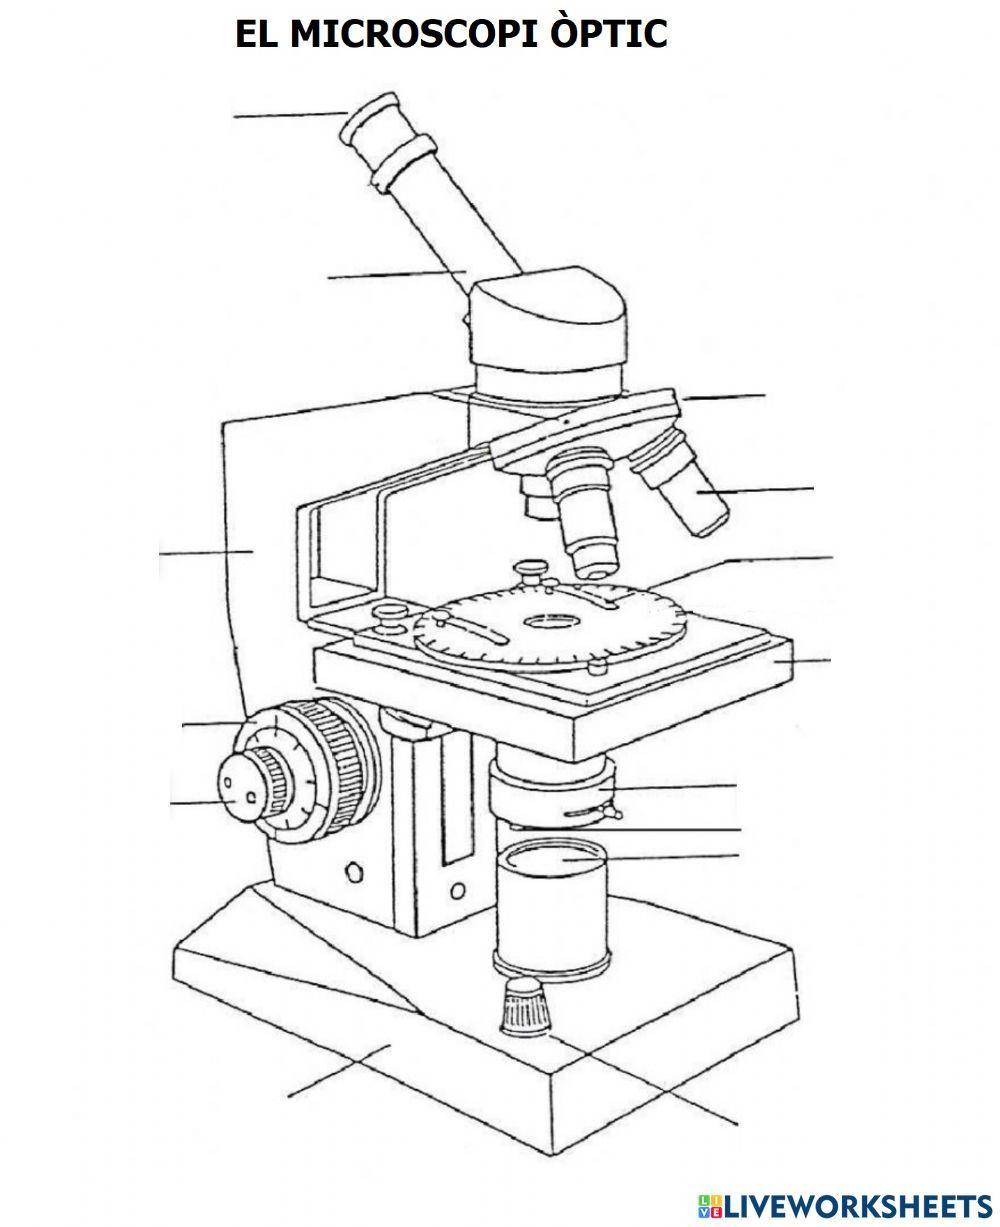 Parts del microscopi